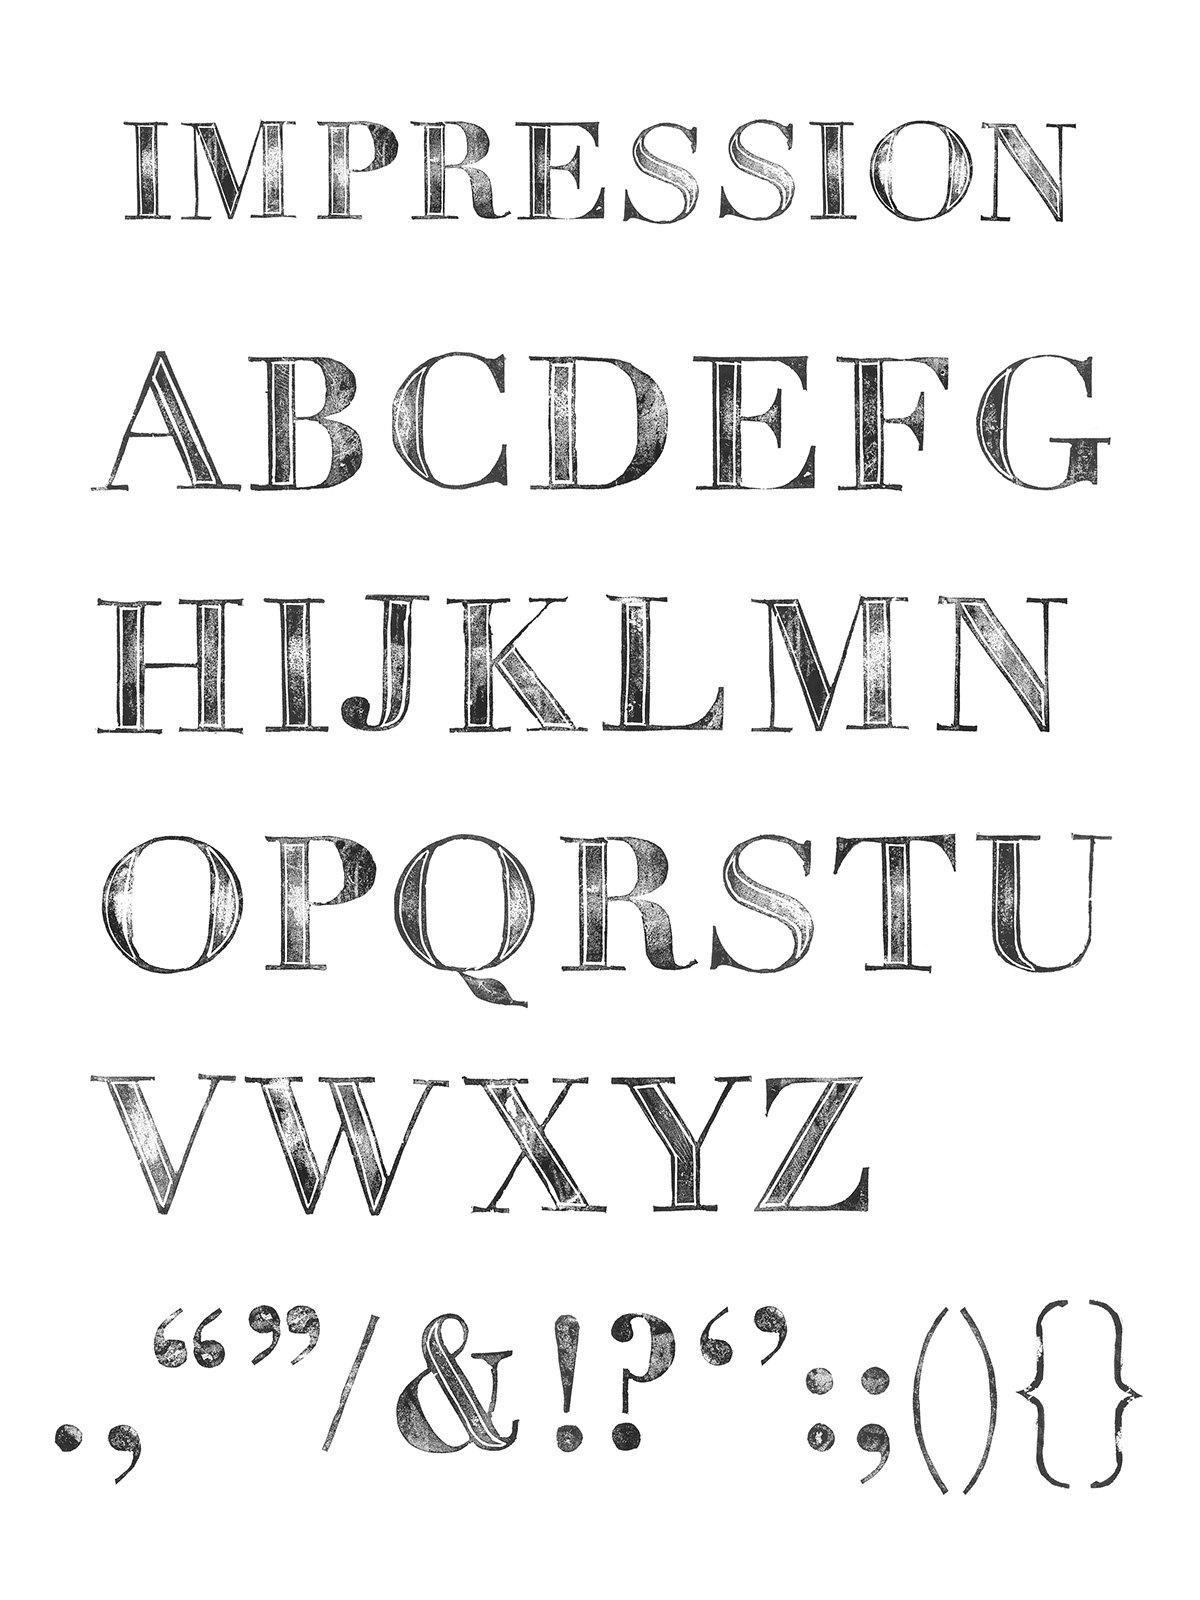 Typeface design stamp carving expressive